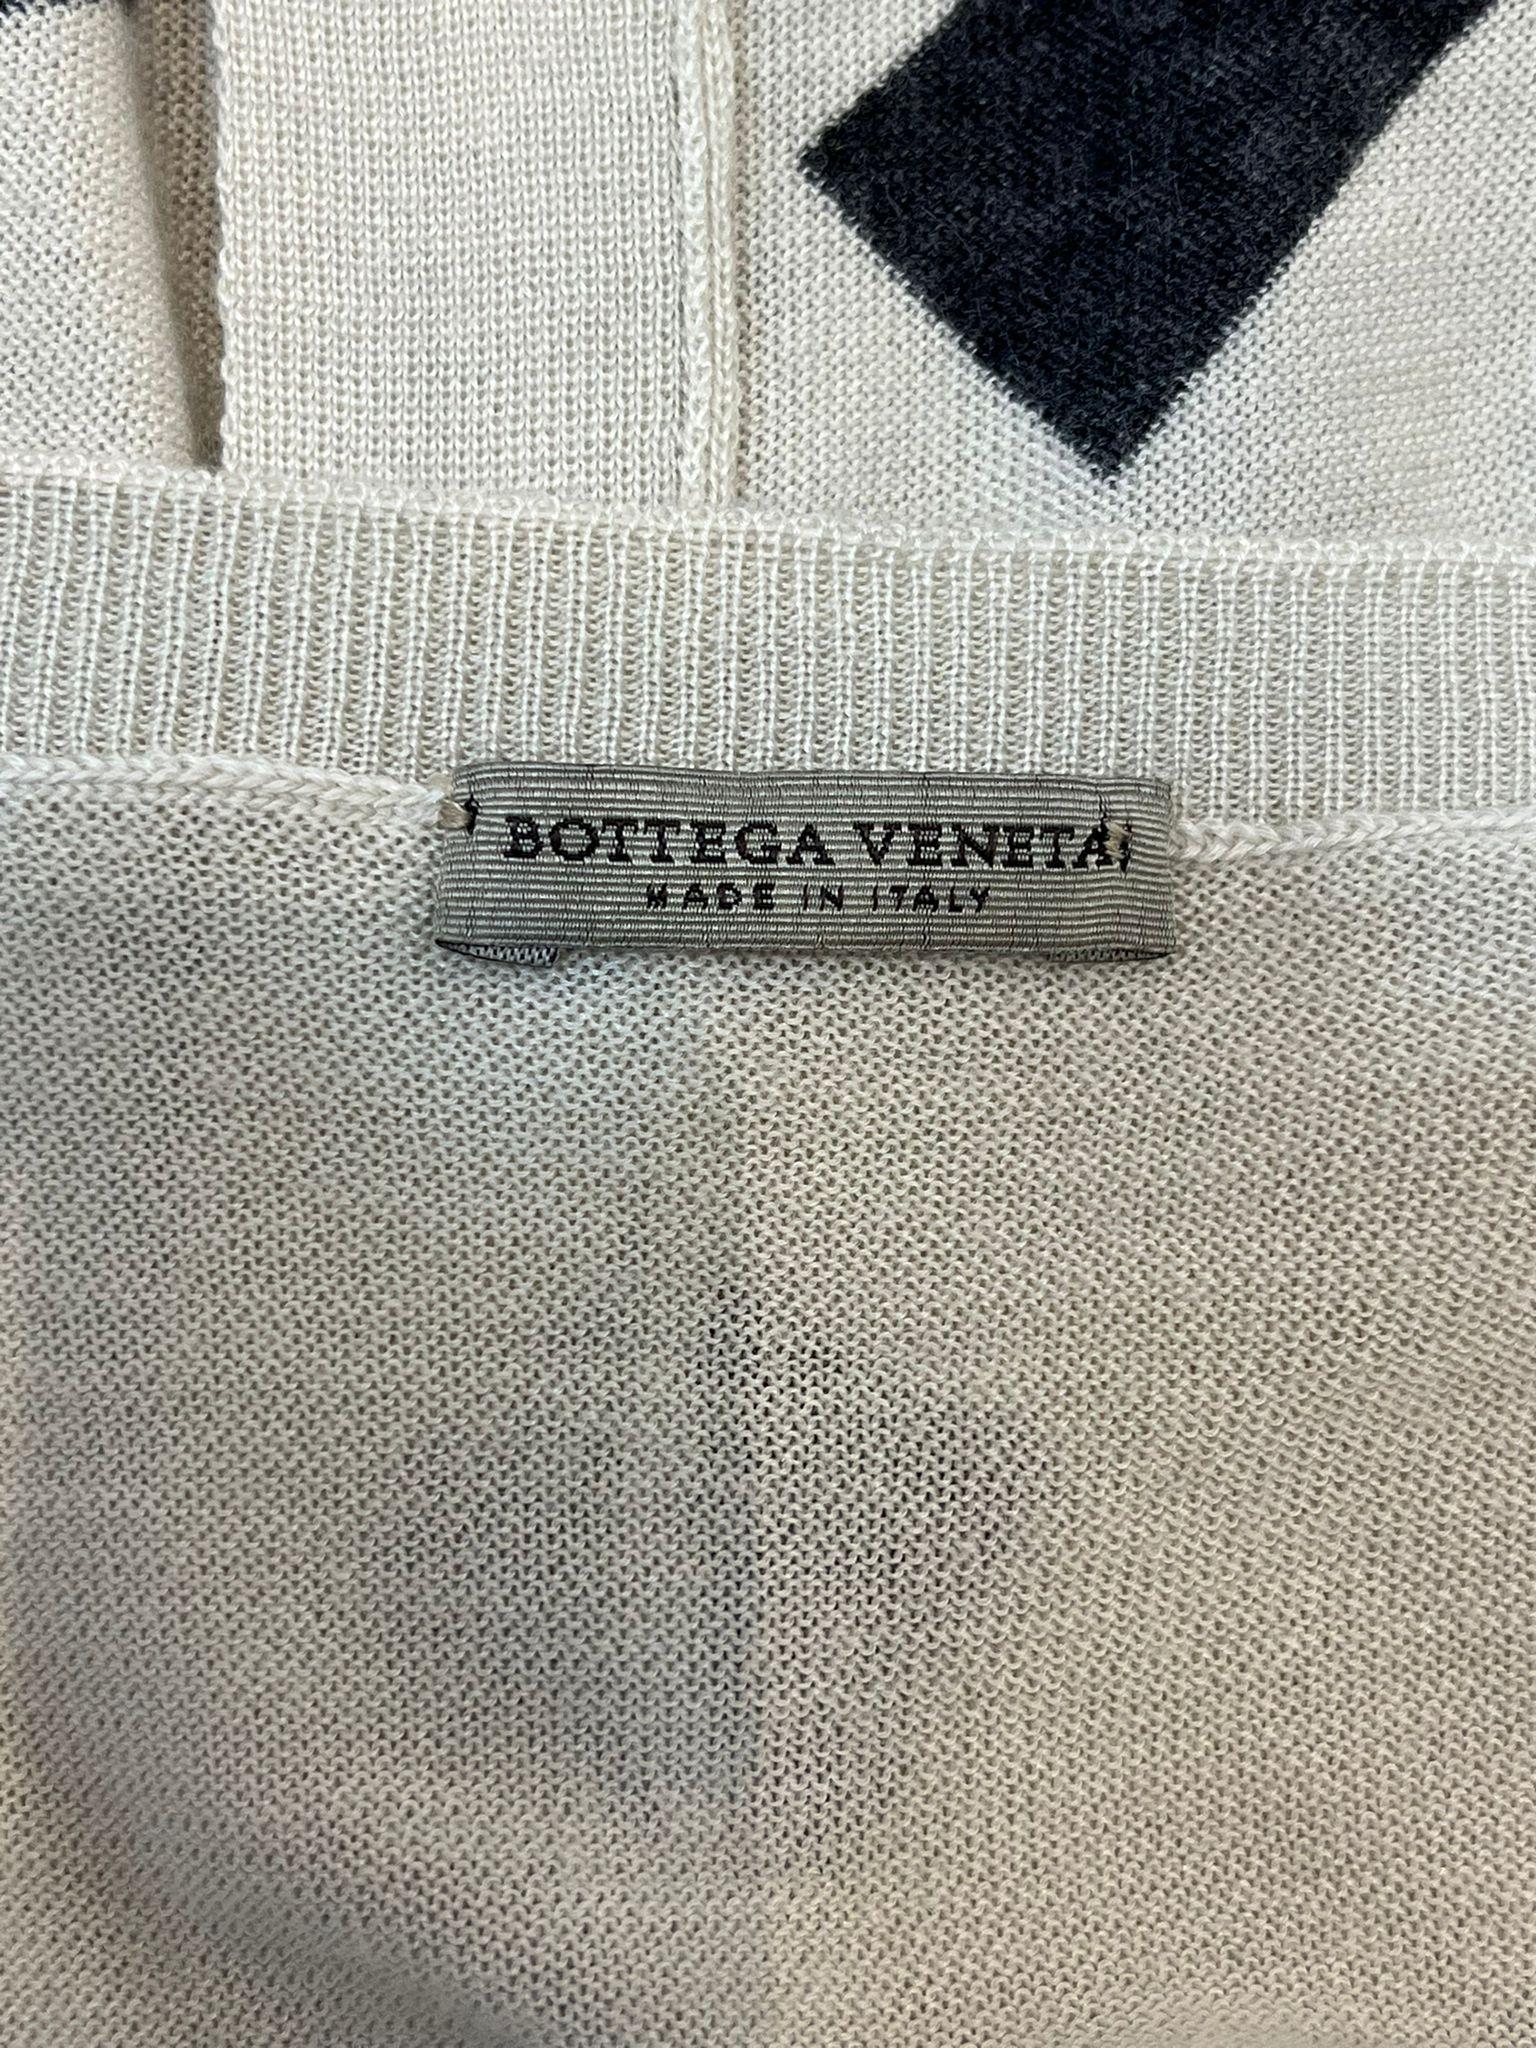 Bottega Veneta 3D Layered Silk & Cashmere Printed Top & Cardigan Set For Sale 2